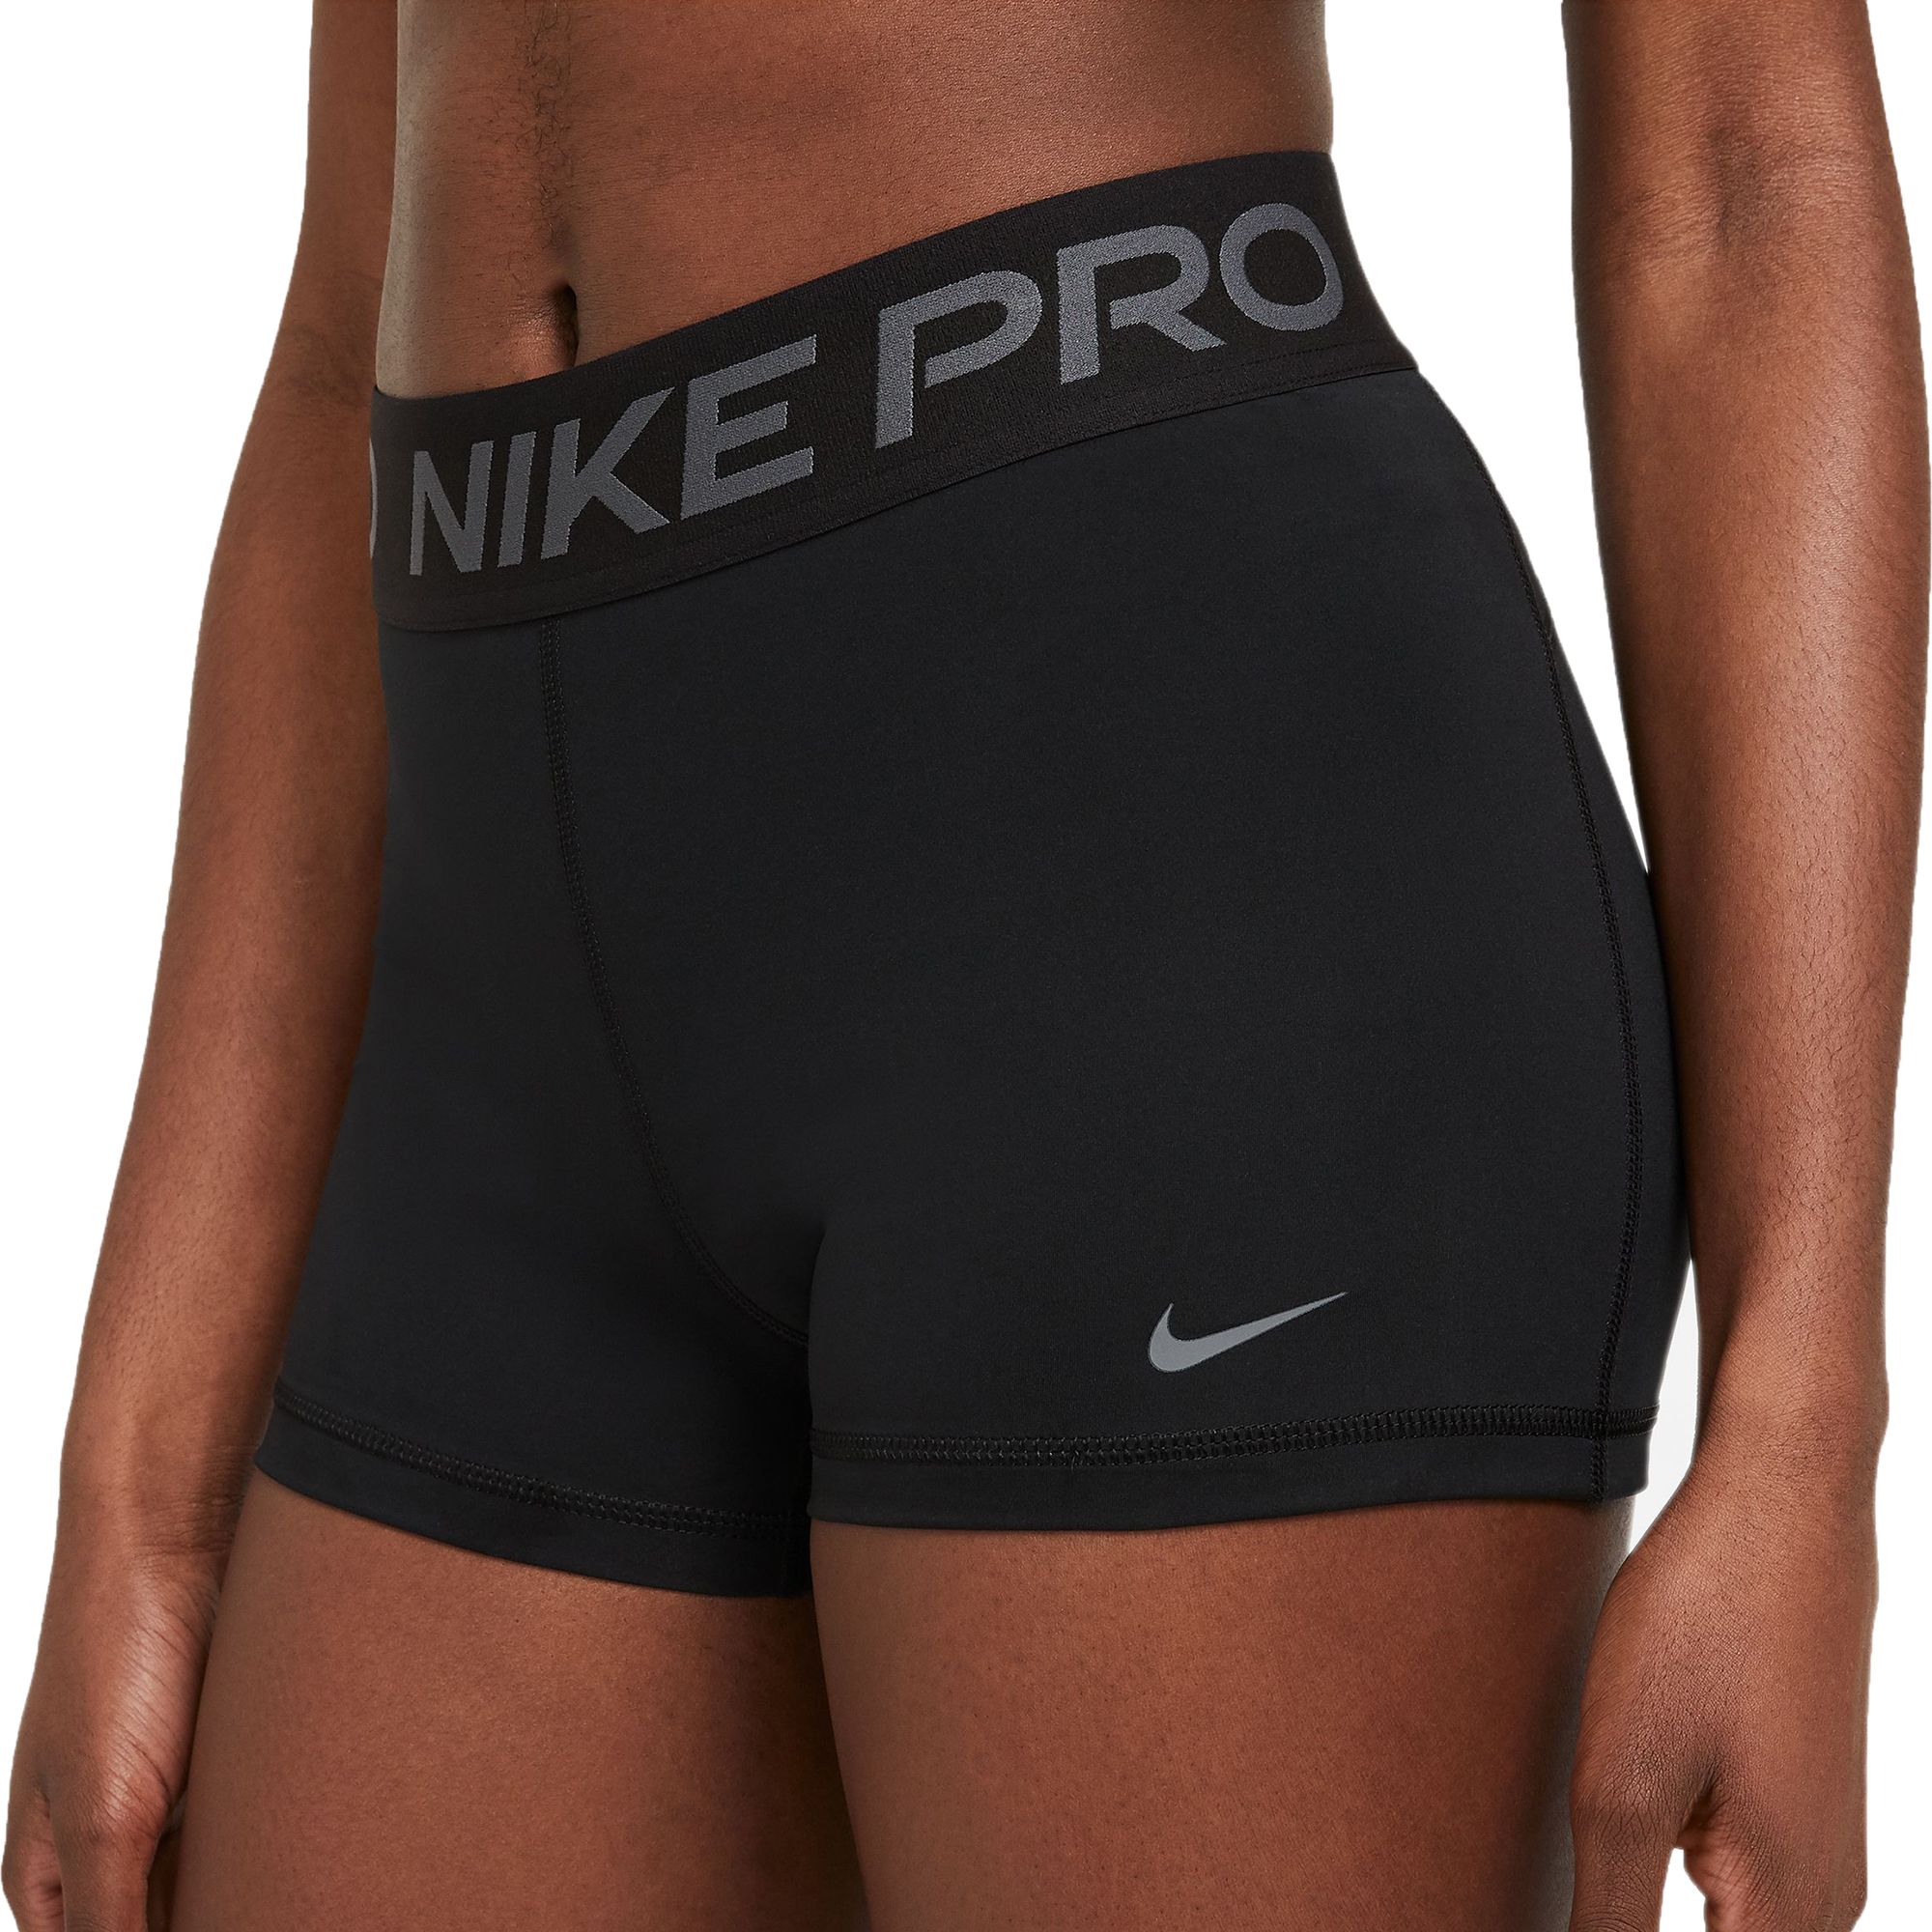 nike pro compression shorts 3 inch